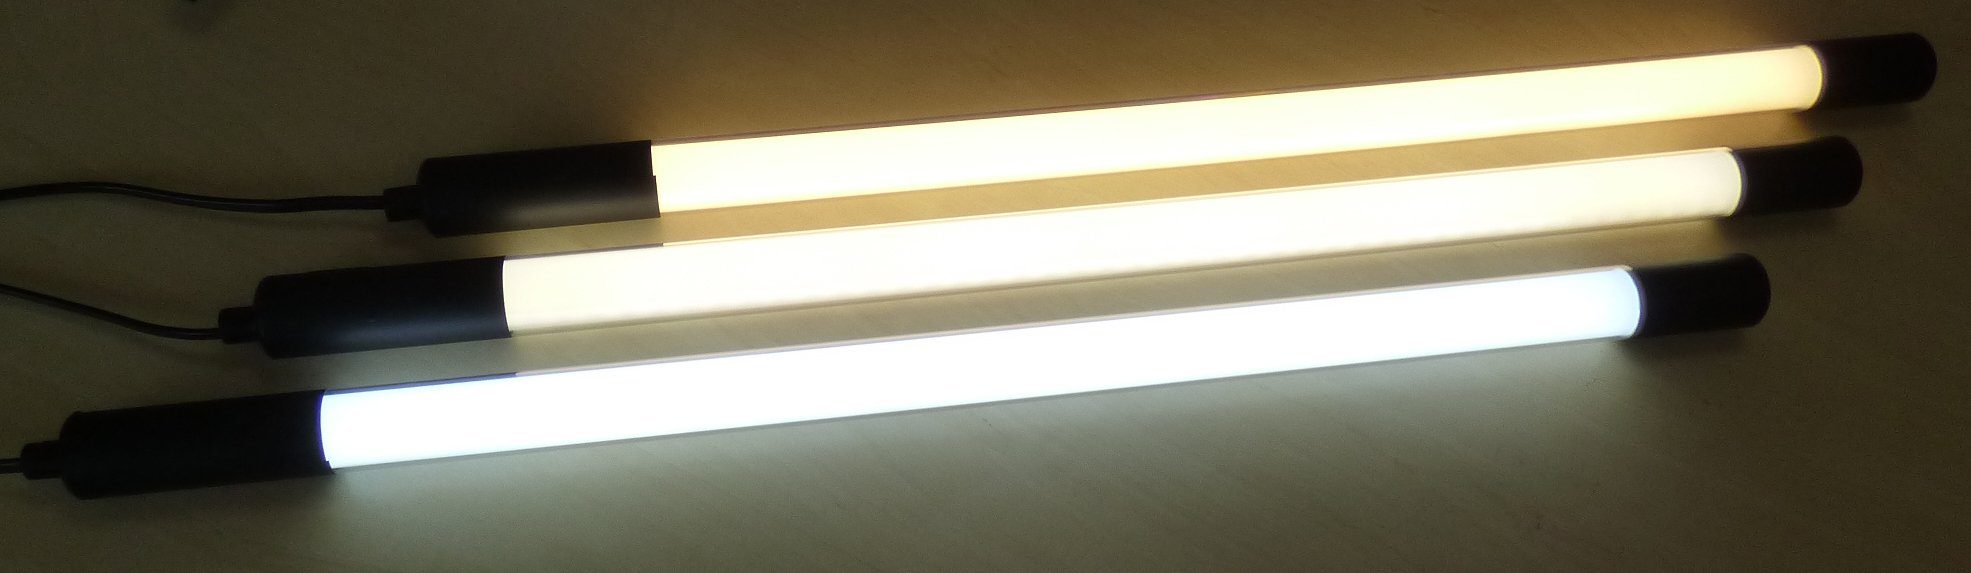 Watt 12 T8, Weiß XENON Leuchtstab Kalt Röhre LED 93cm Klipse, Wandleuchte Weiß LED Lm Kalt IP20 Befestigungs Xenon 1200